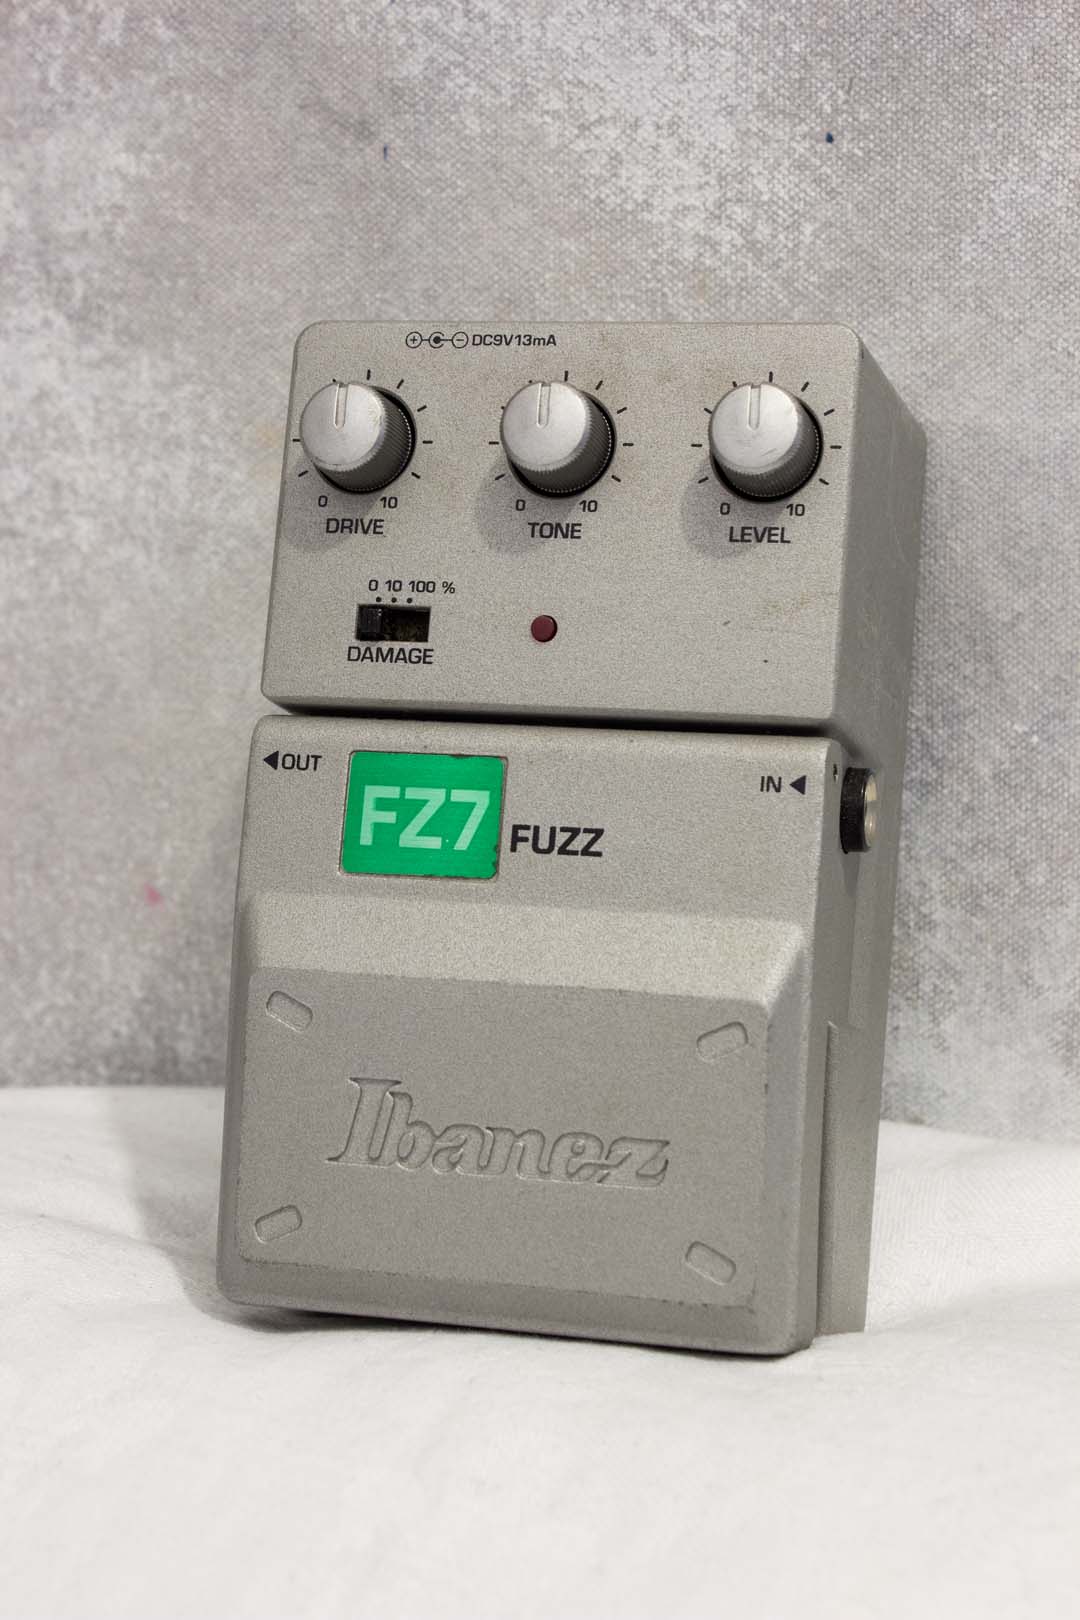 Ibanez FZ7 DS7 TS7 エフェクター3個セット 高価値 - ギター